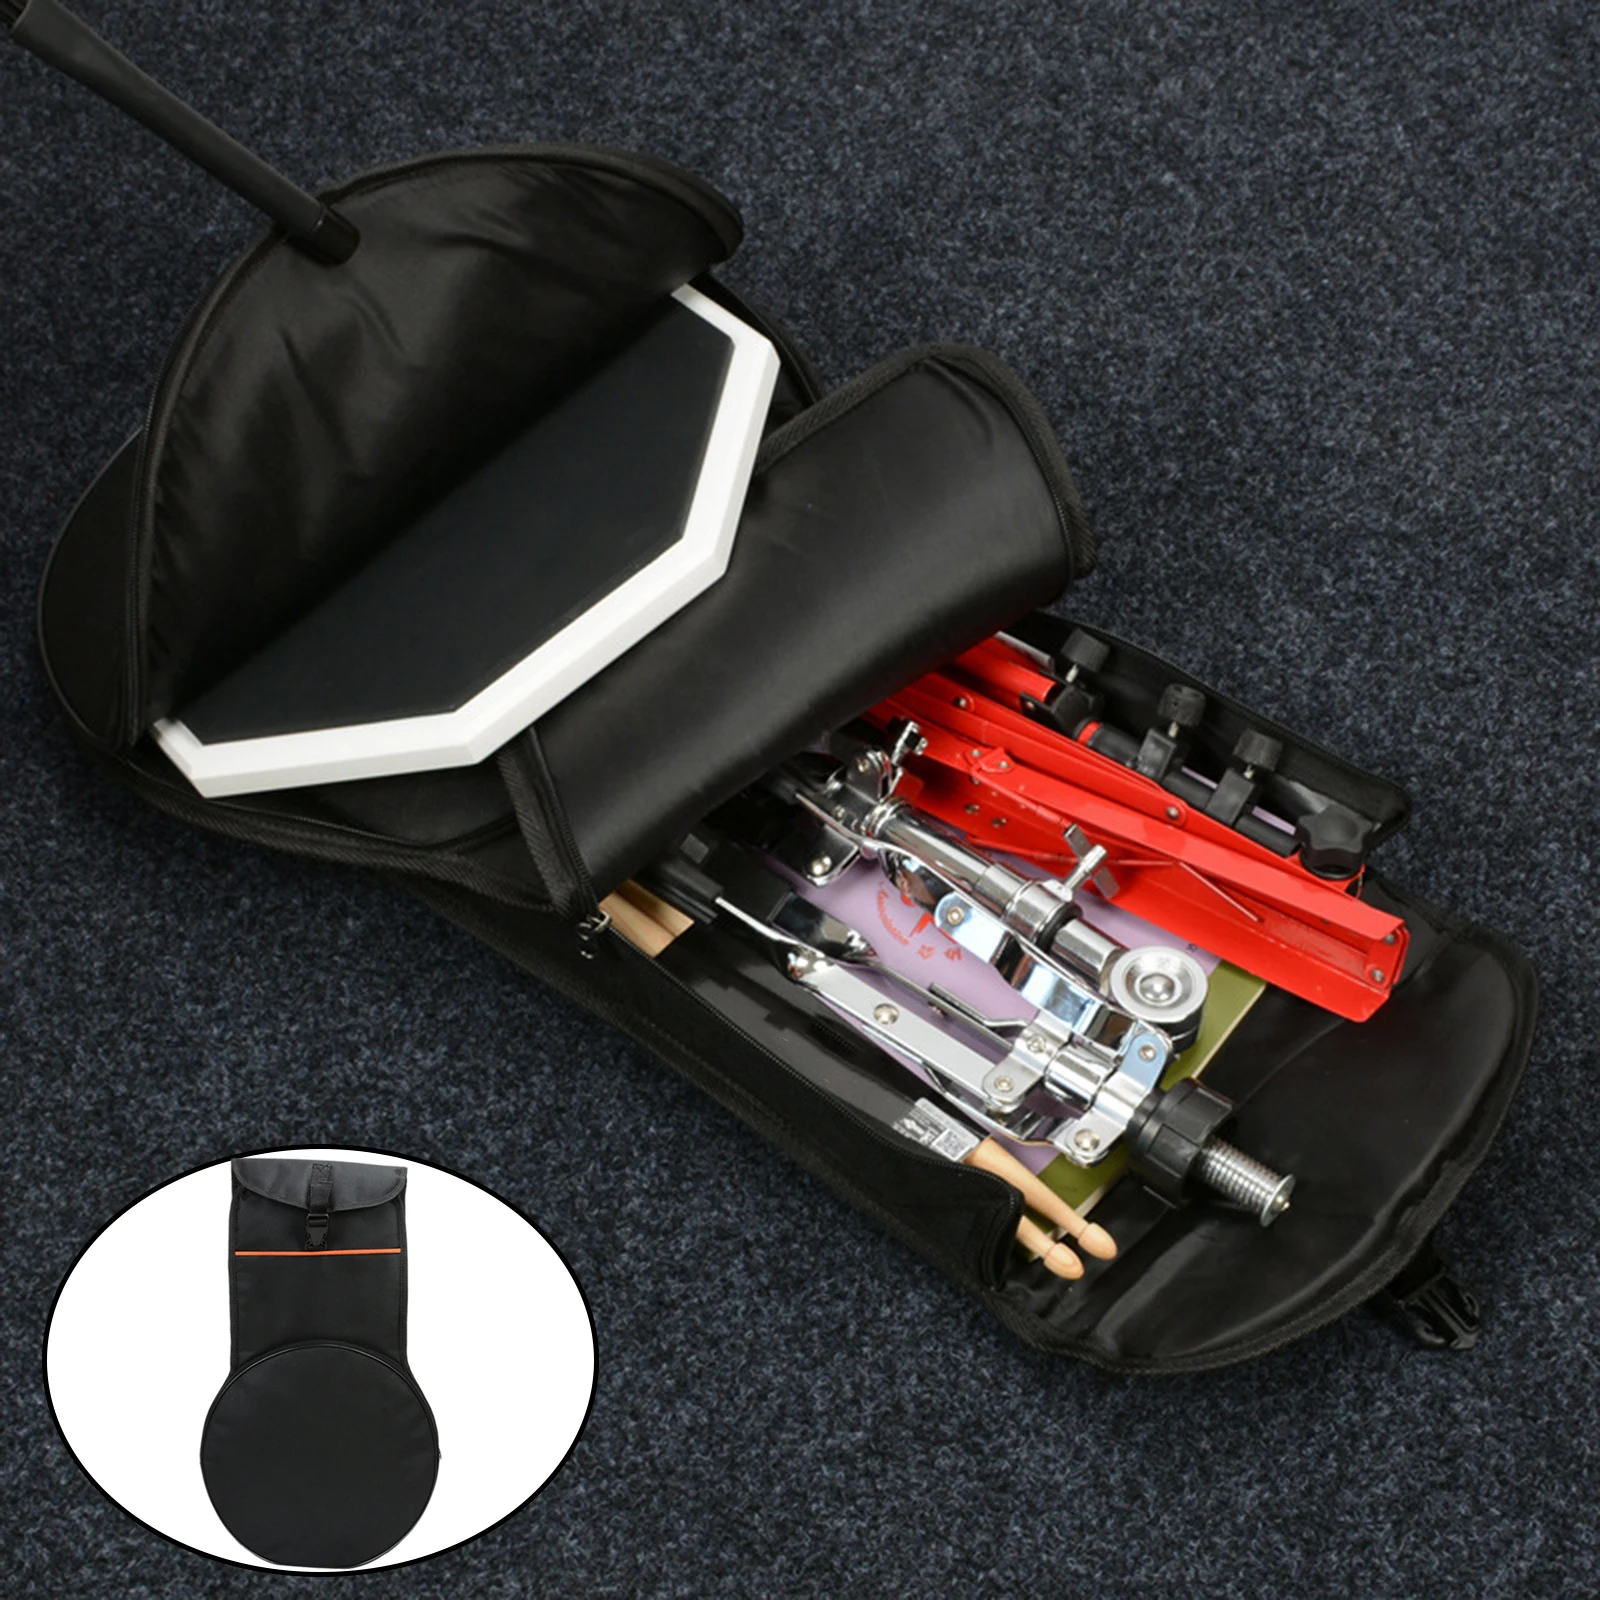 12 Inch Dumb Drum Bags Drum Pouch Storage Bag Adjustable Straps Partition Design Carrying Bag for Drum Instrument Accessories